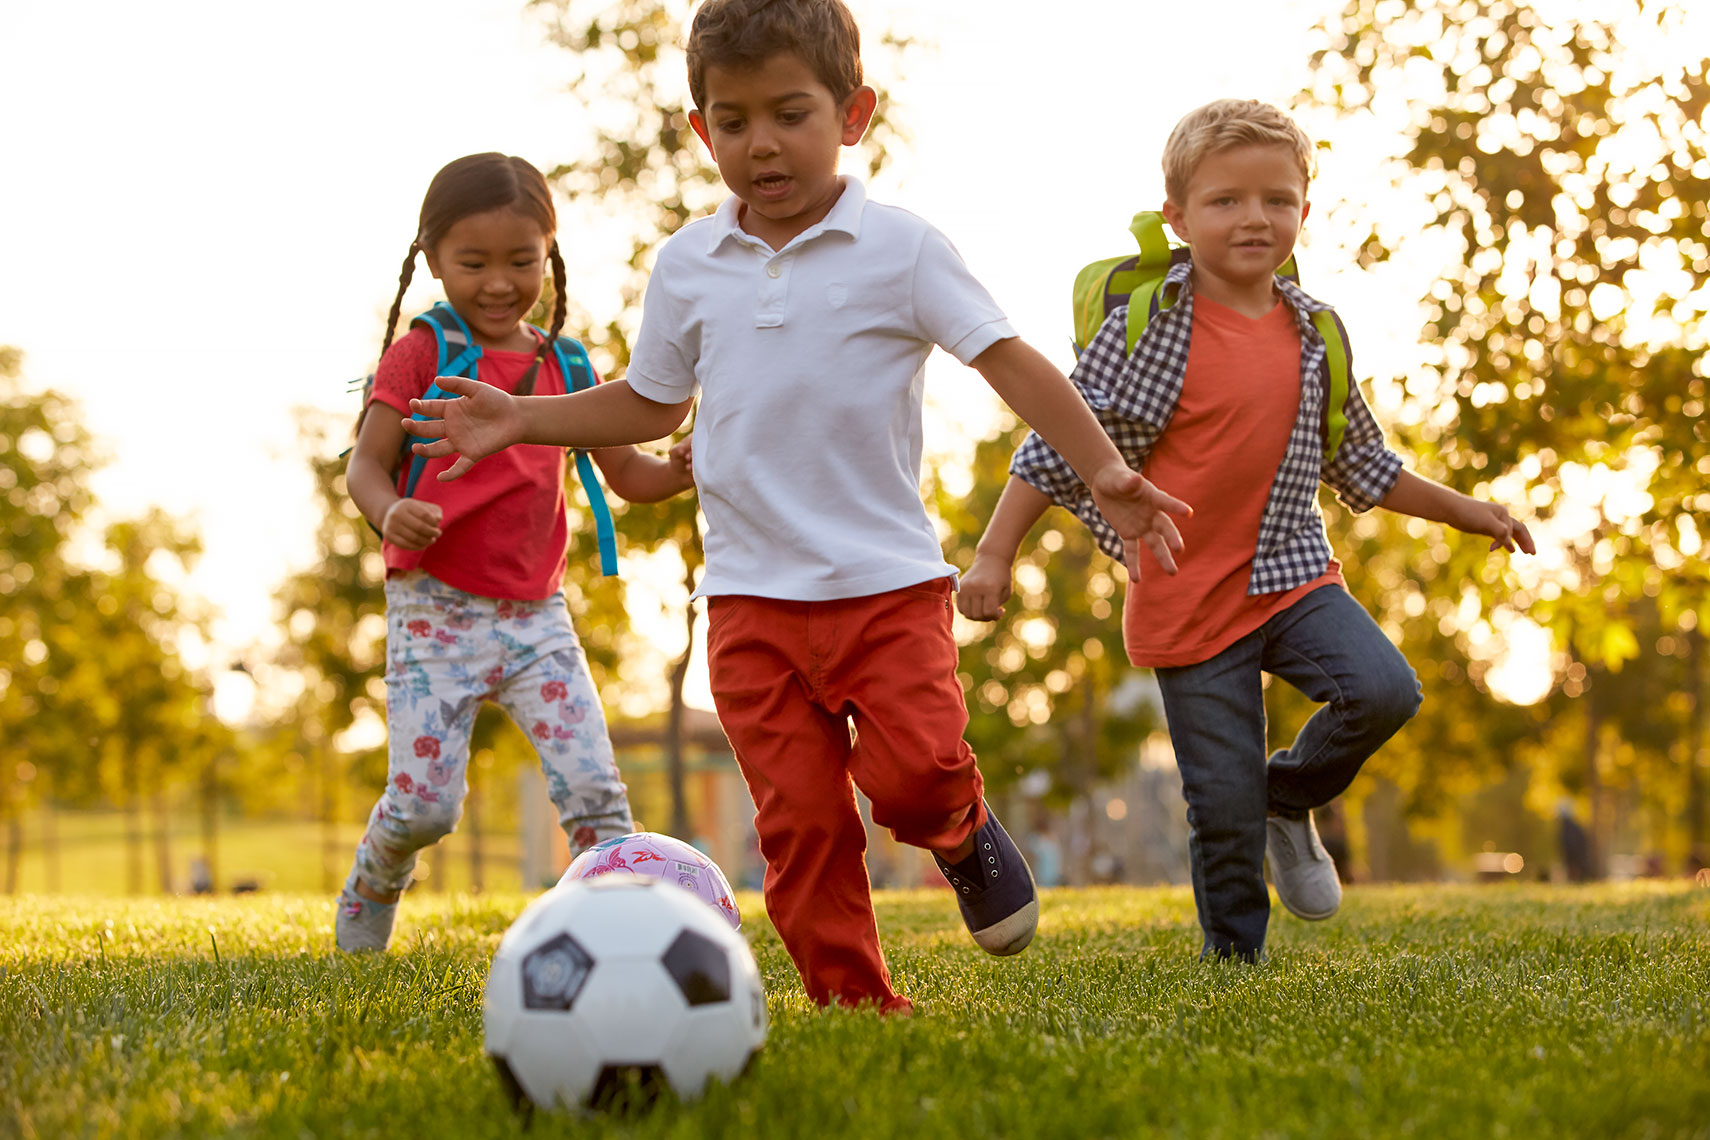 Lifestyle-056-neighborhood-kids-park-soccer